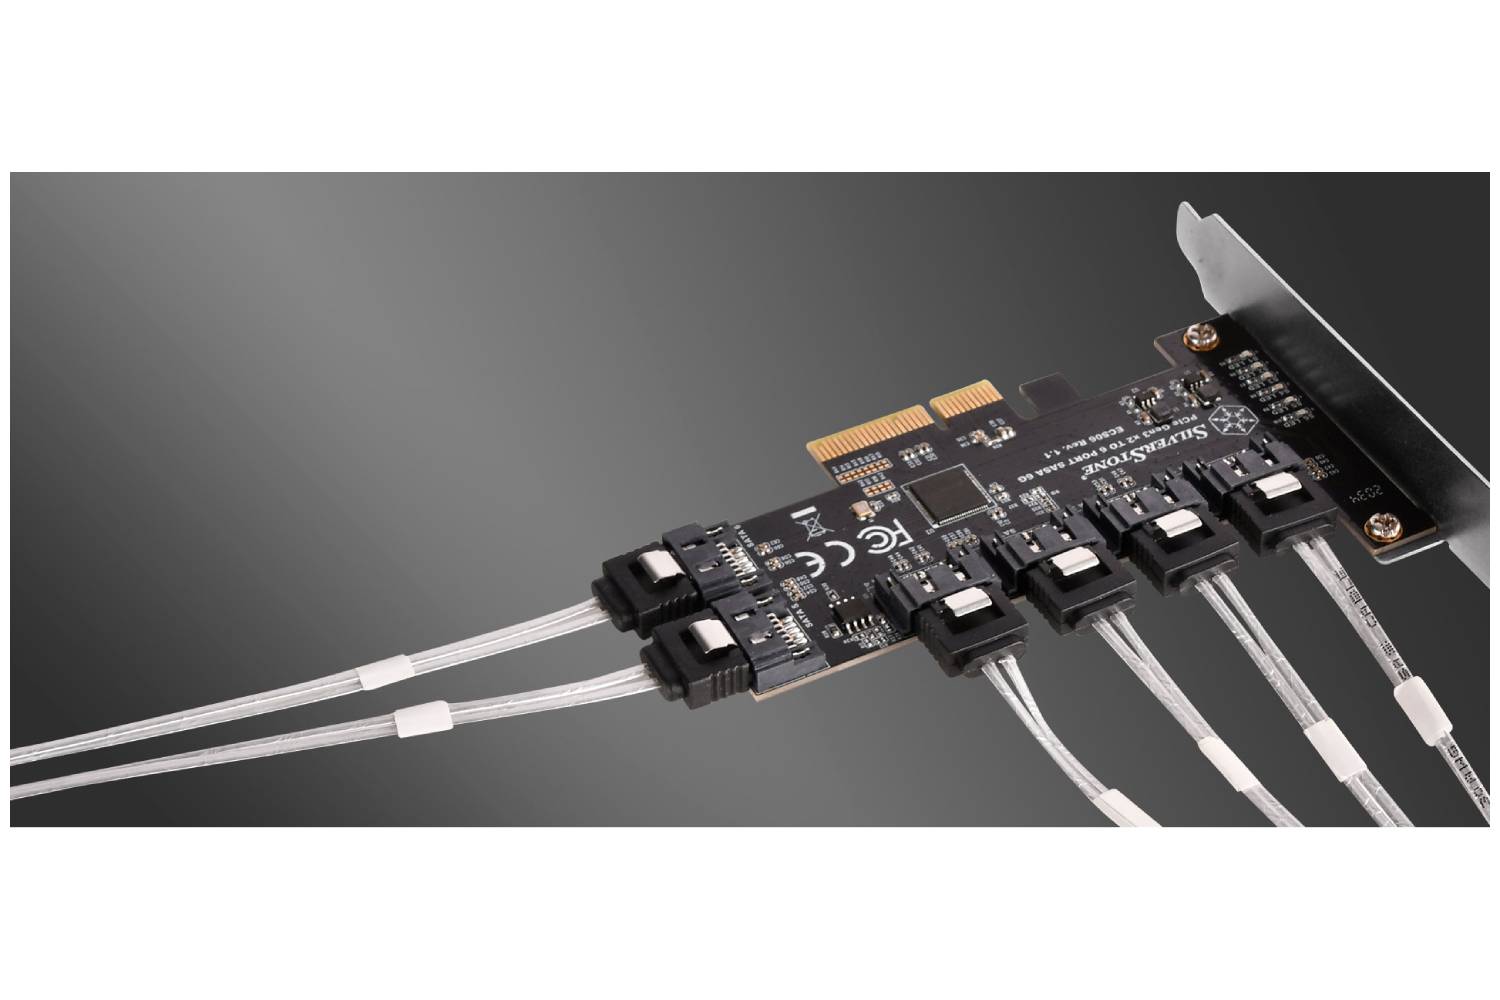 SilverStone Technology ECS06 6 Port SATA Gen3 (6Gbps) Non-RAID PCI Express Gen3 x2 Card